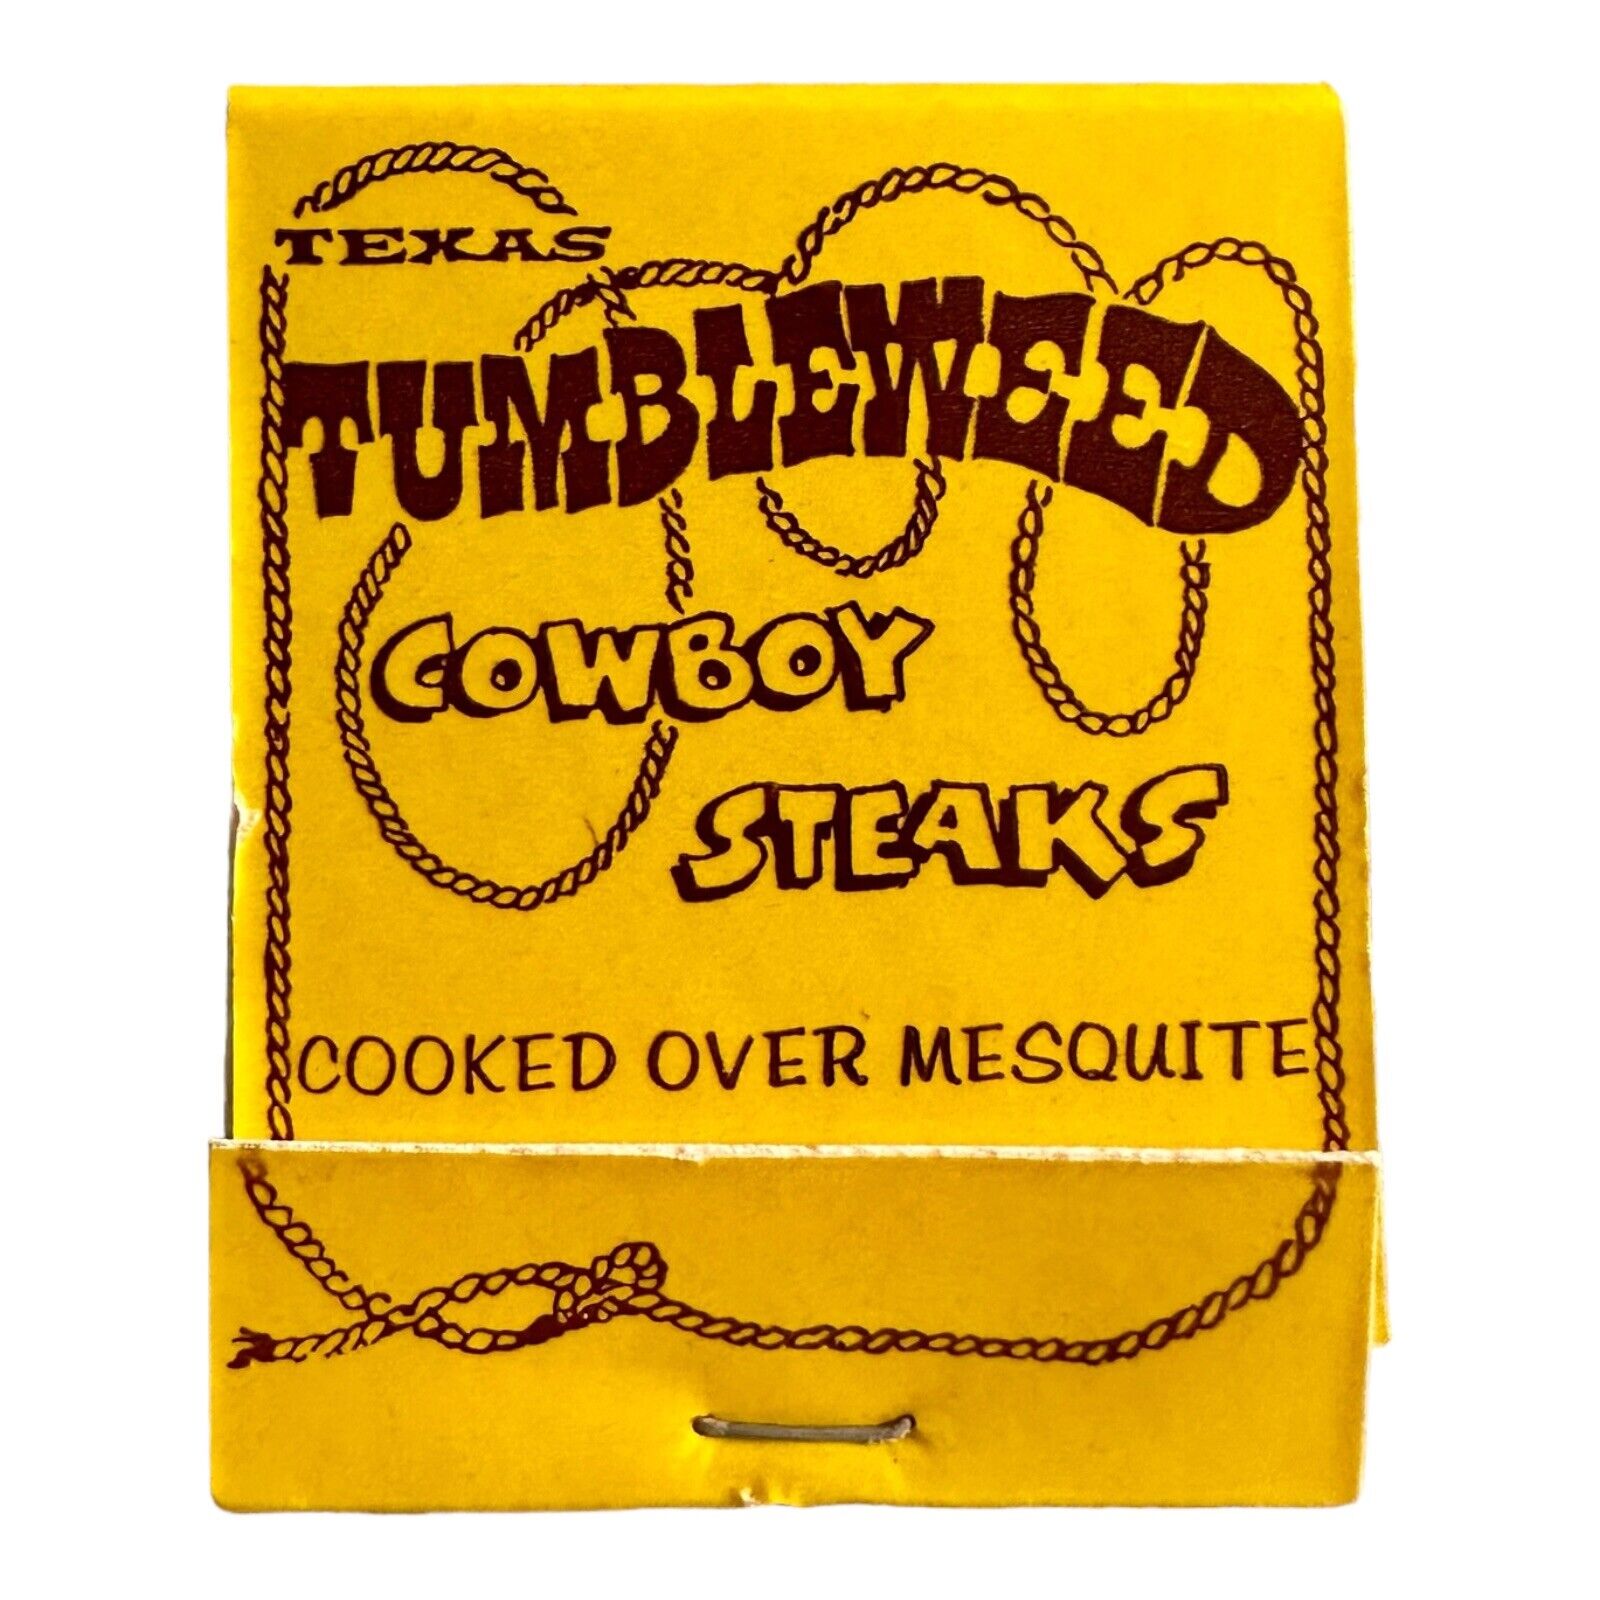 Vintage TEXAS TUMBLEWEED Cowboy Steaks Full Matchbook Match Unstruck Matches